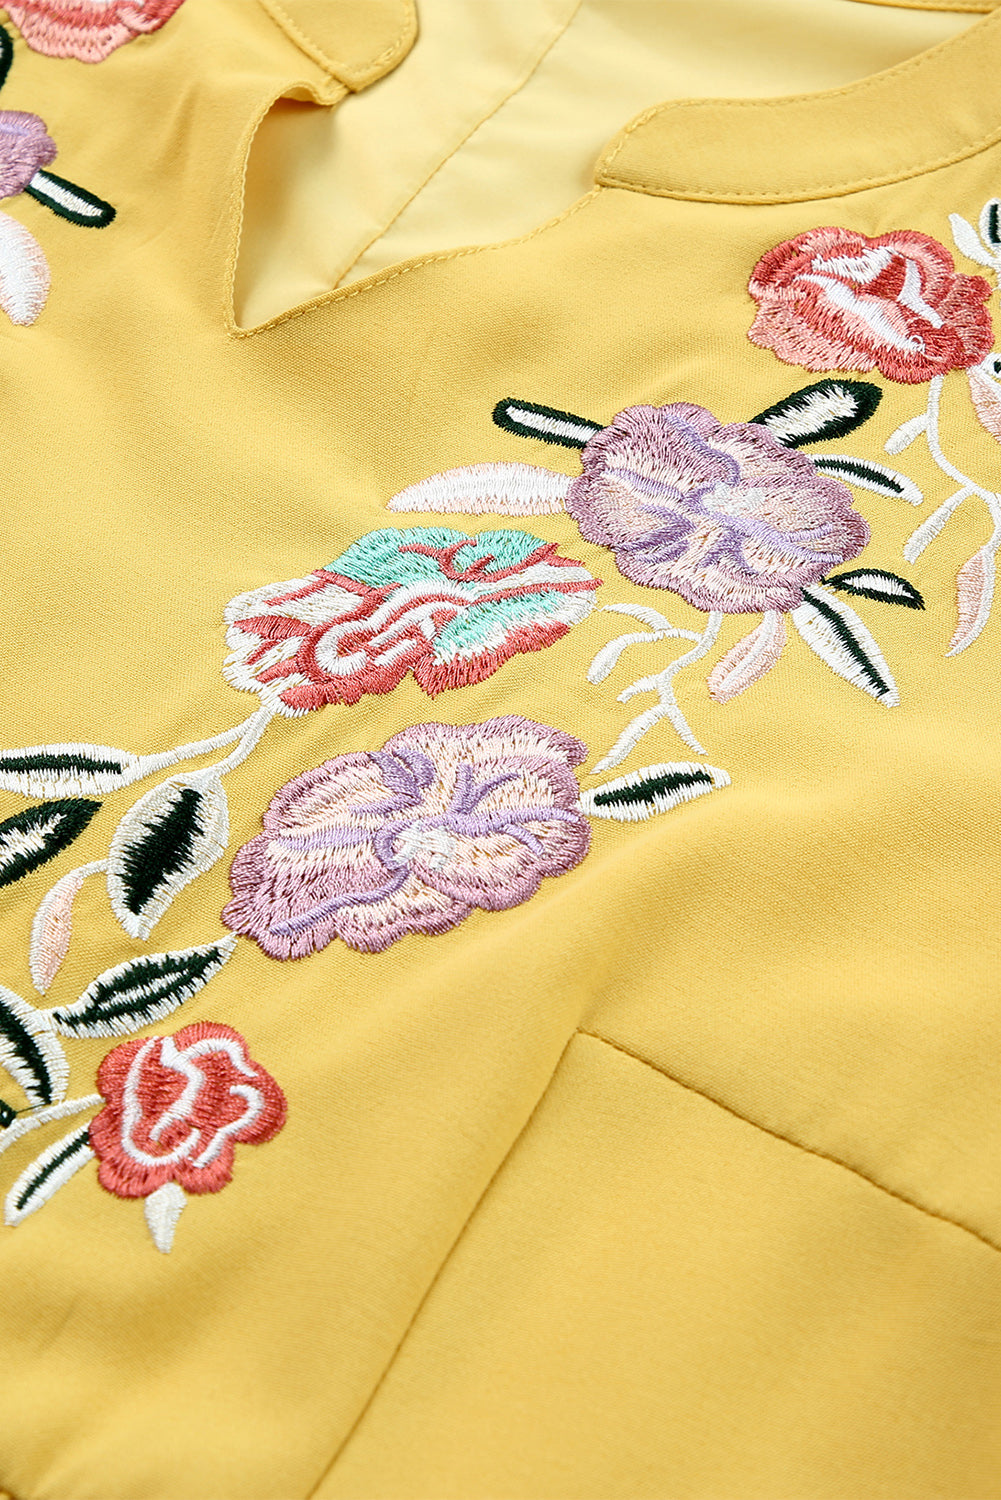 Robe trapèze babydoll jaune à fleurs brodées à col fendu